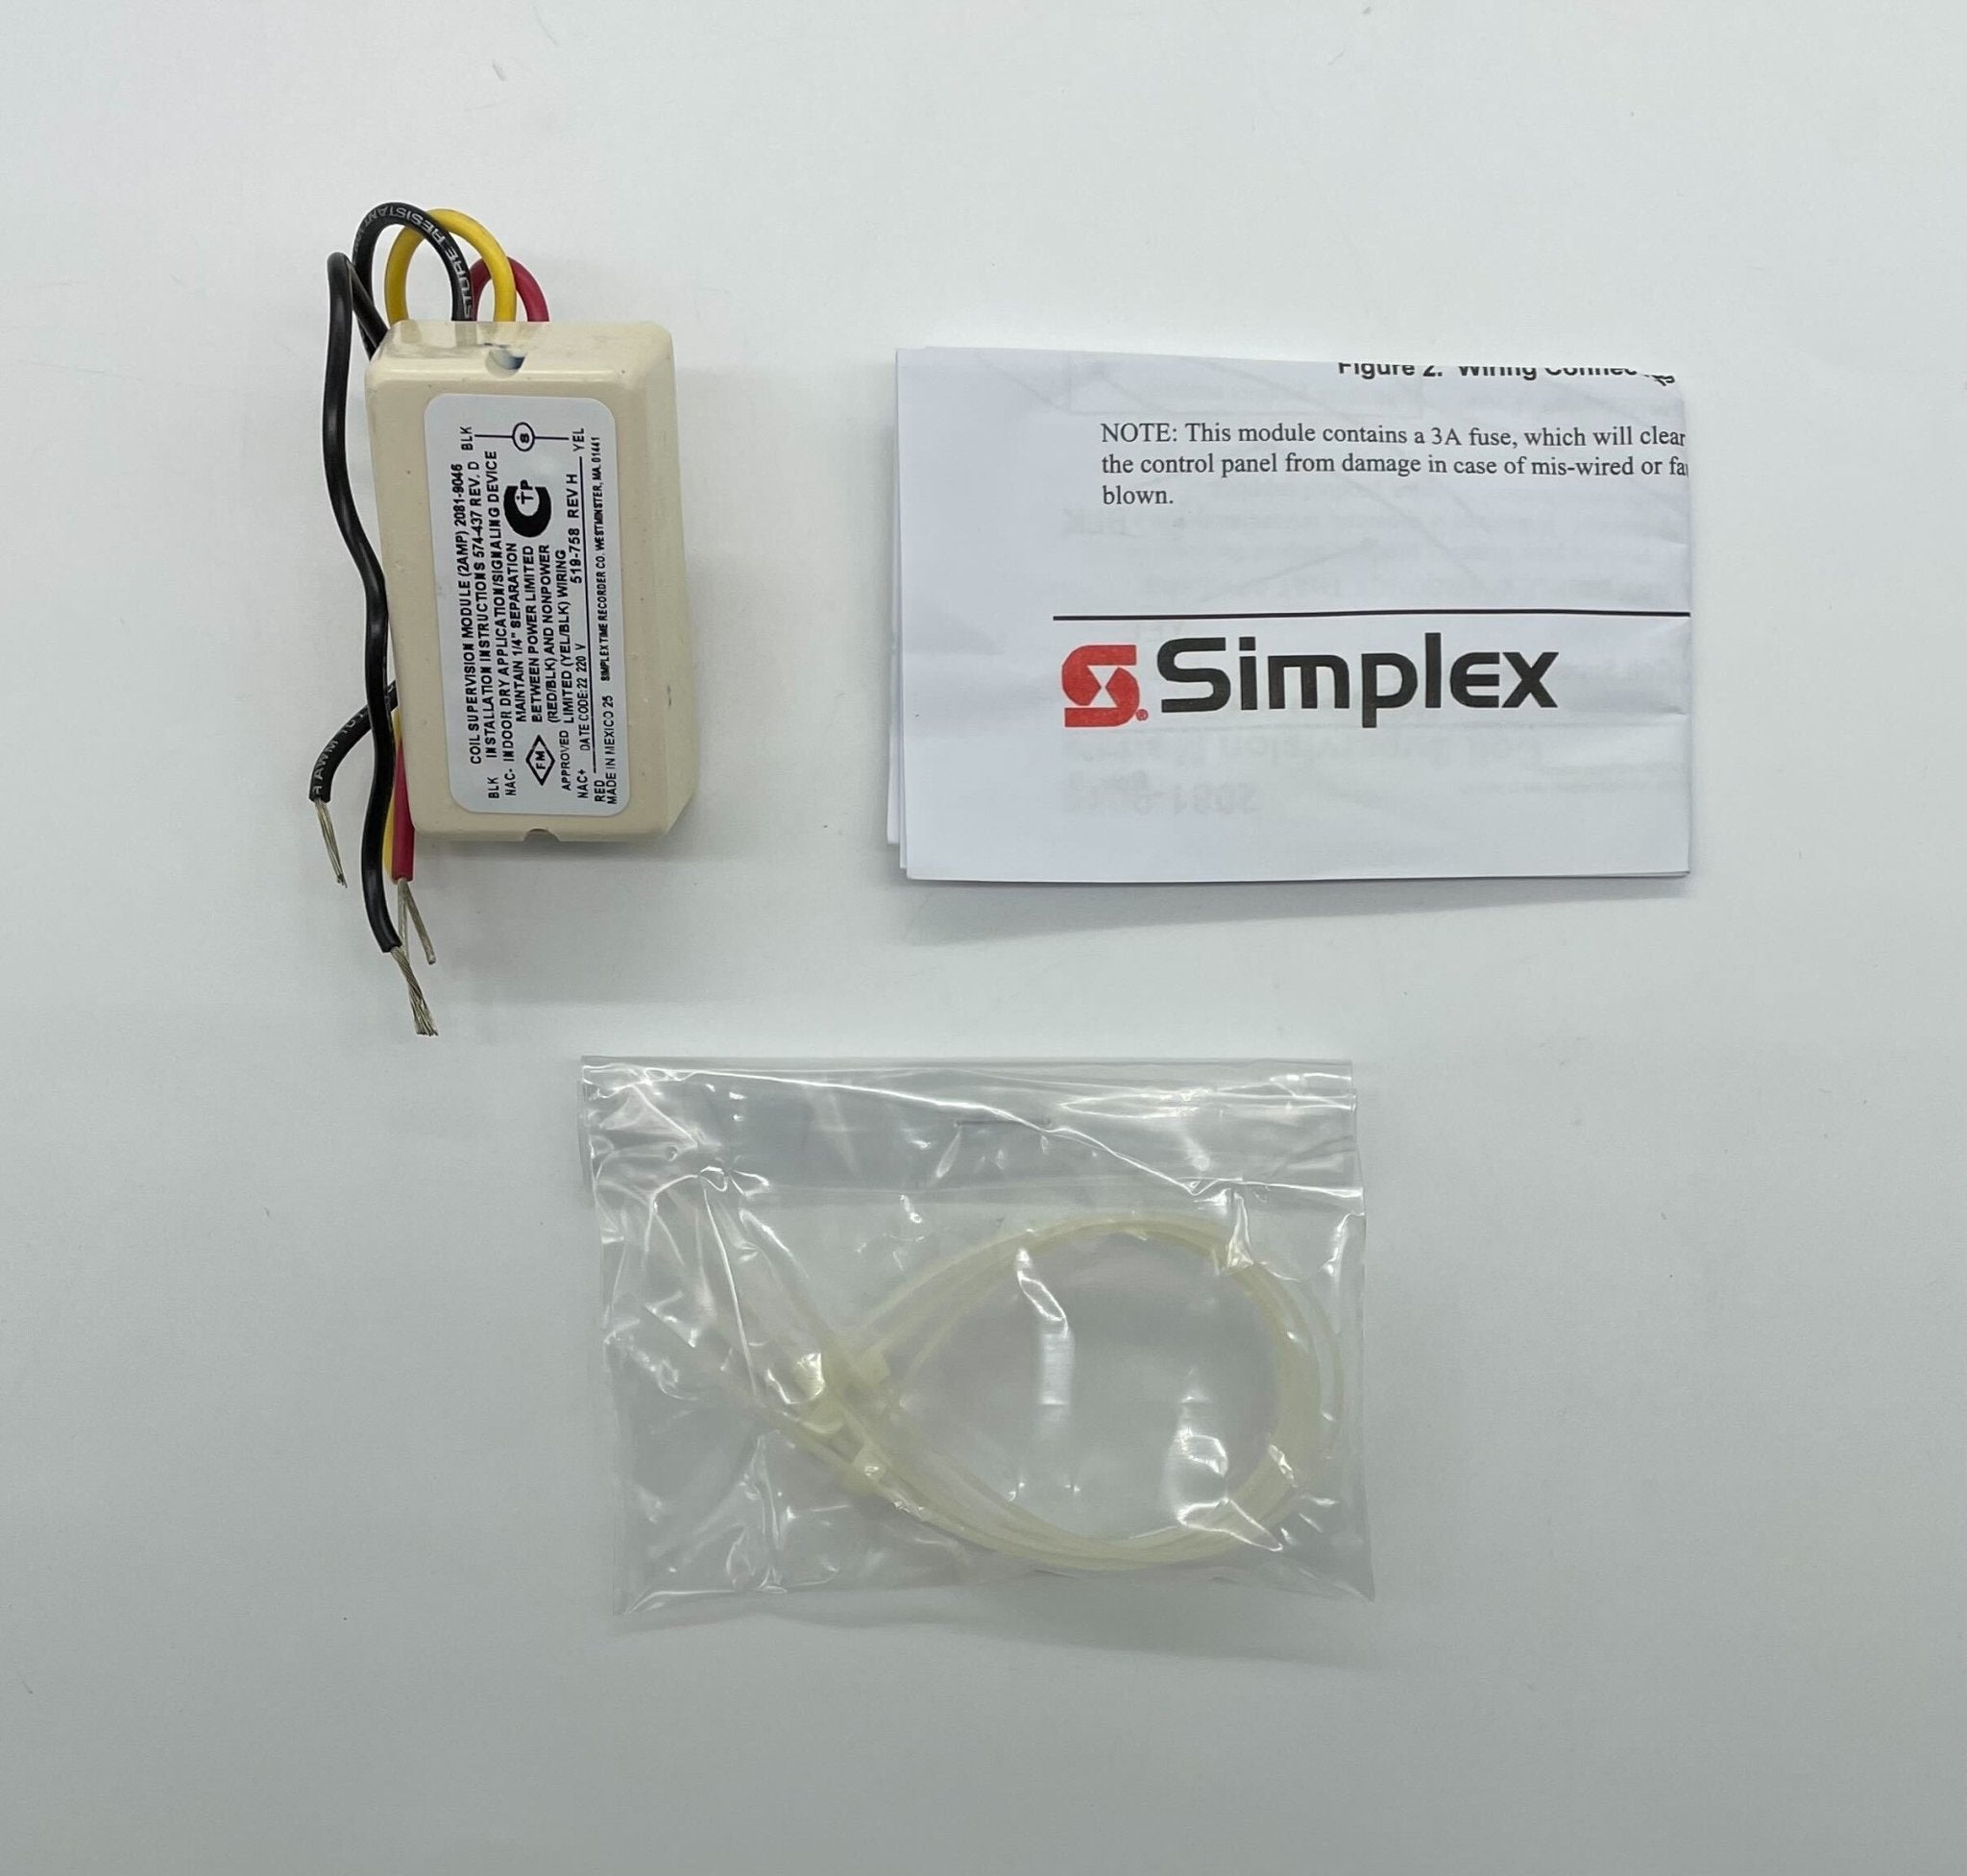 Simplex 2081-9046 - The Fire Alarm Supplier